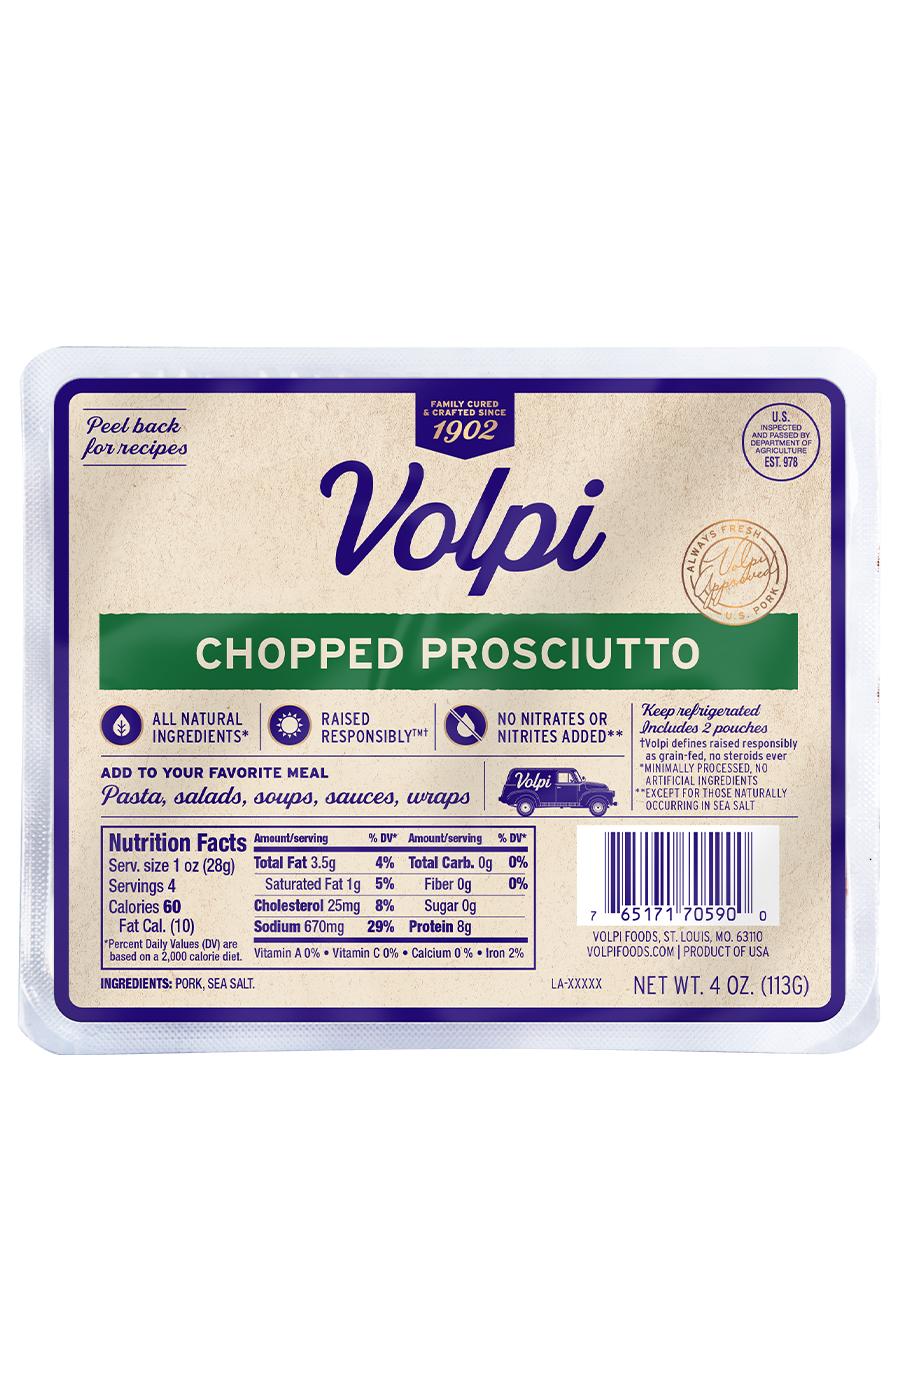 Volpi Chopped Prosciutto; image 1 of 3